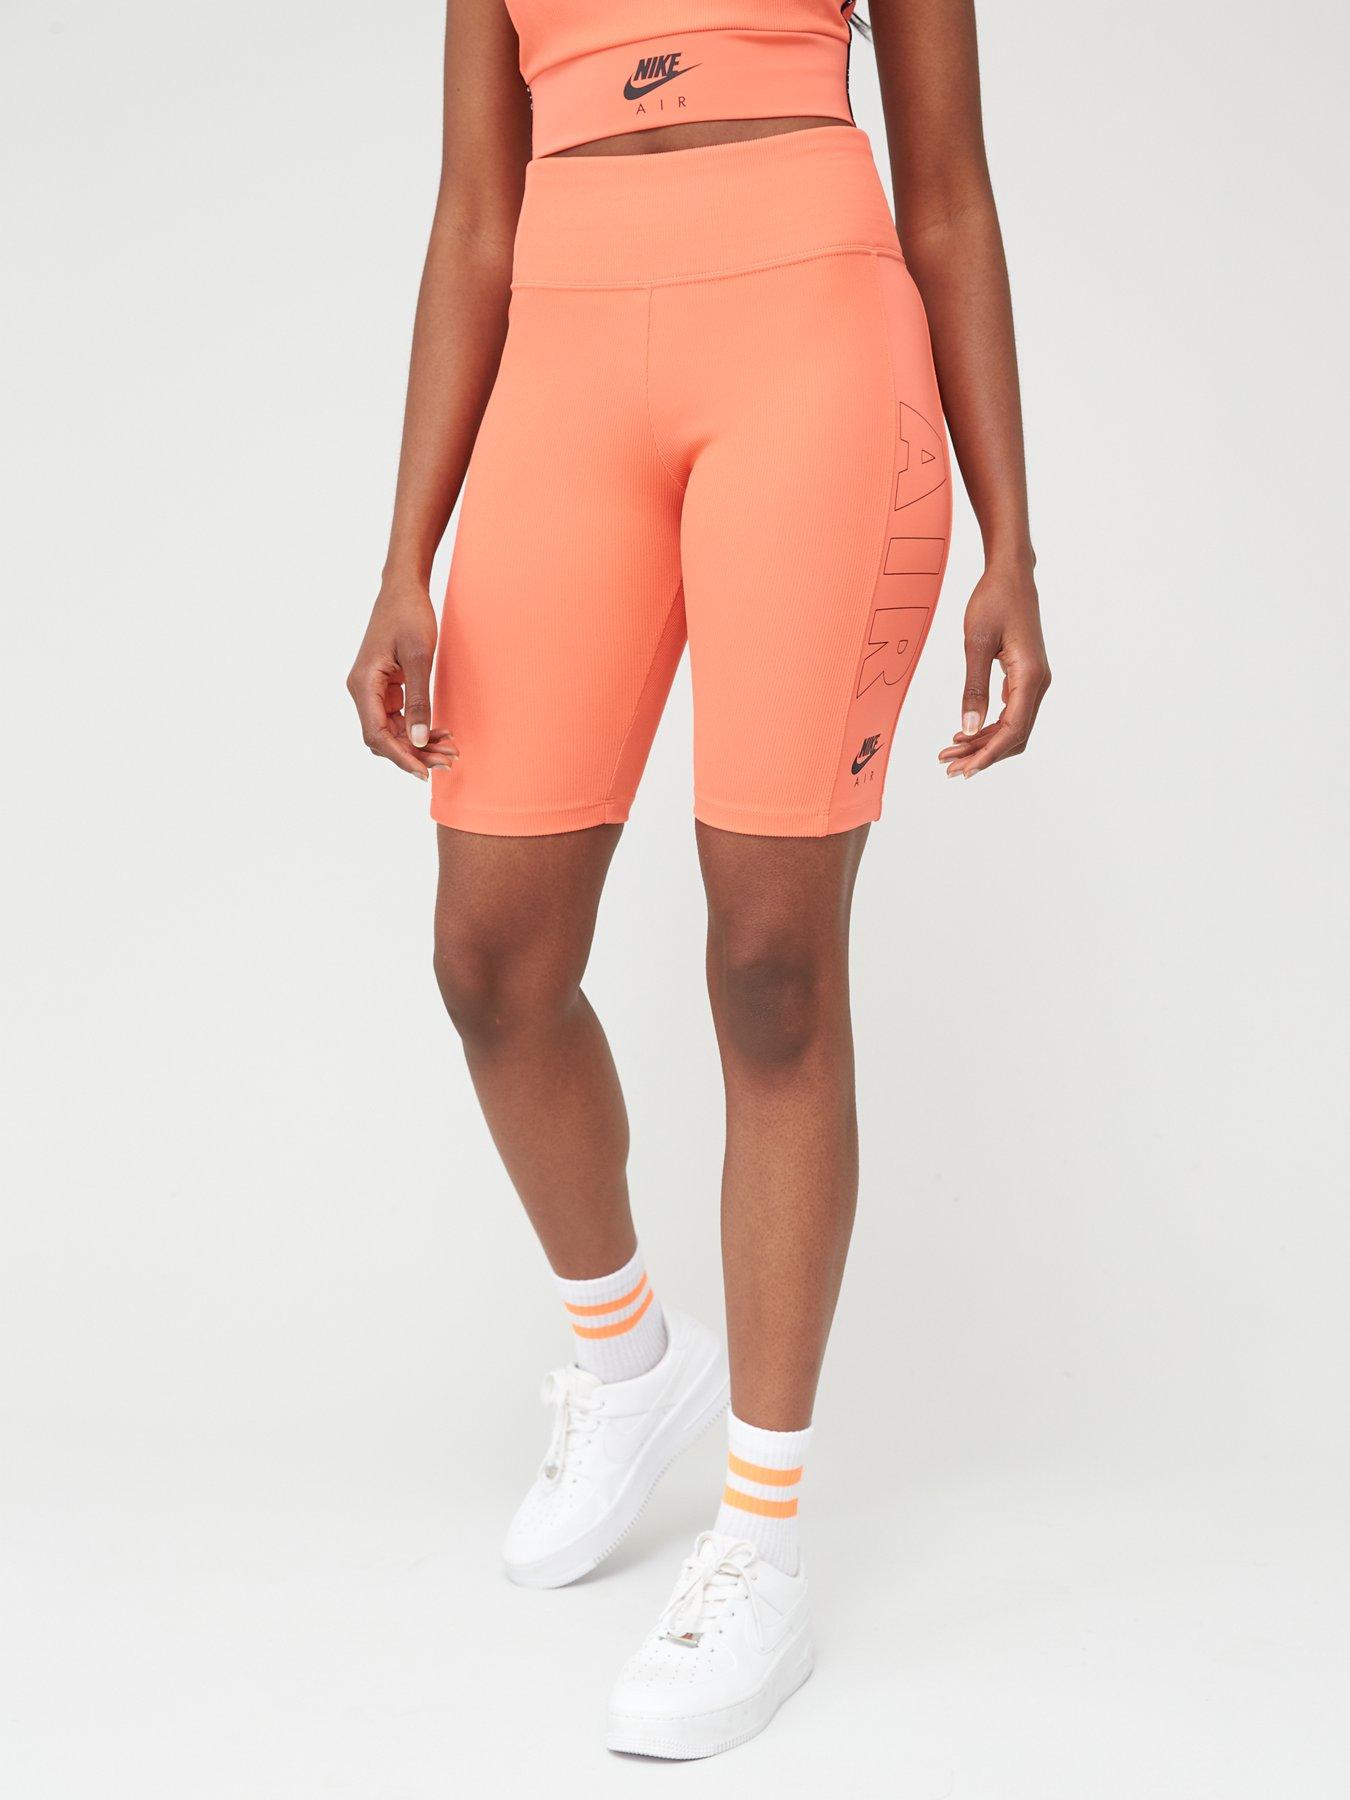 orange nike biker shorts